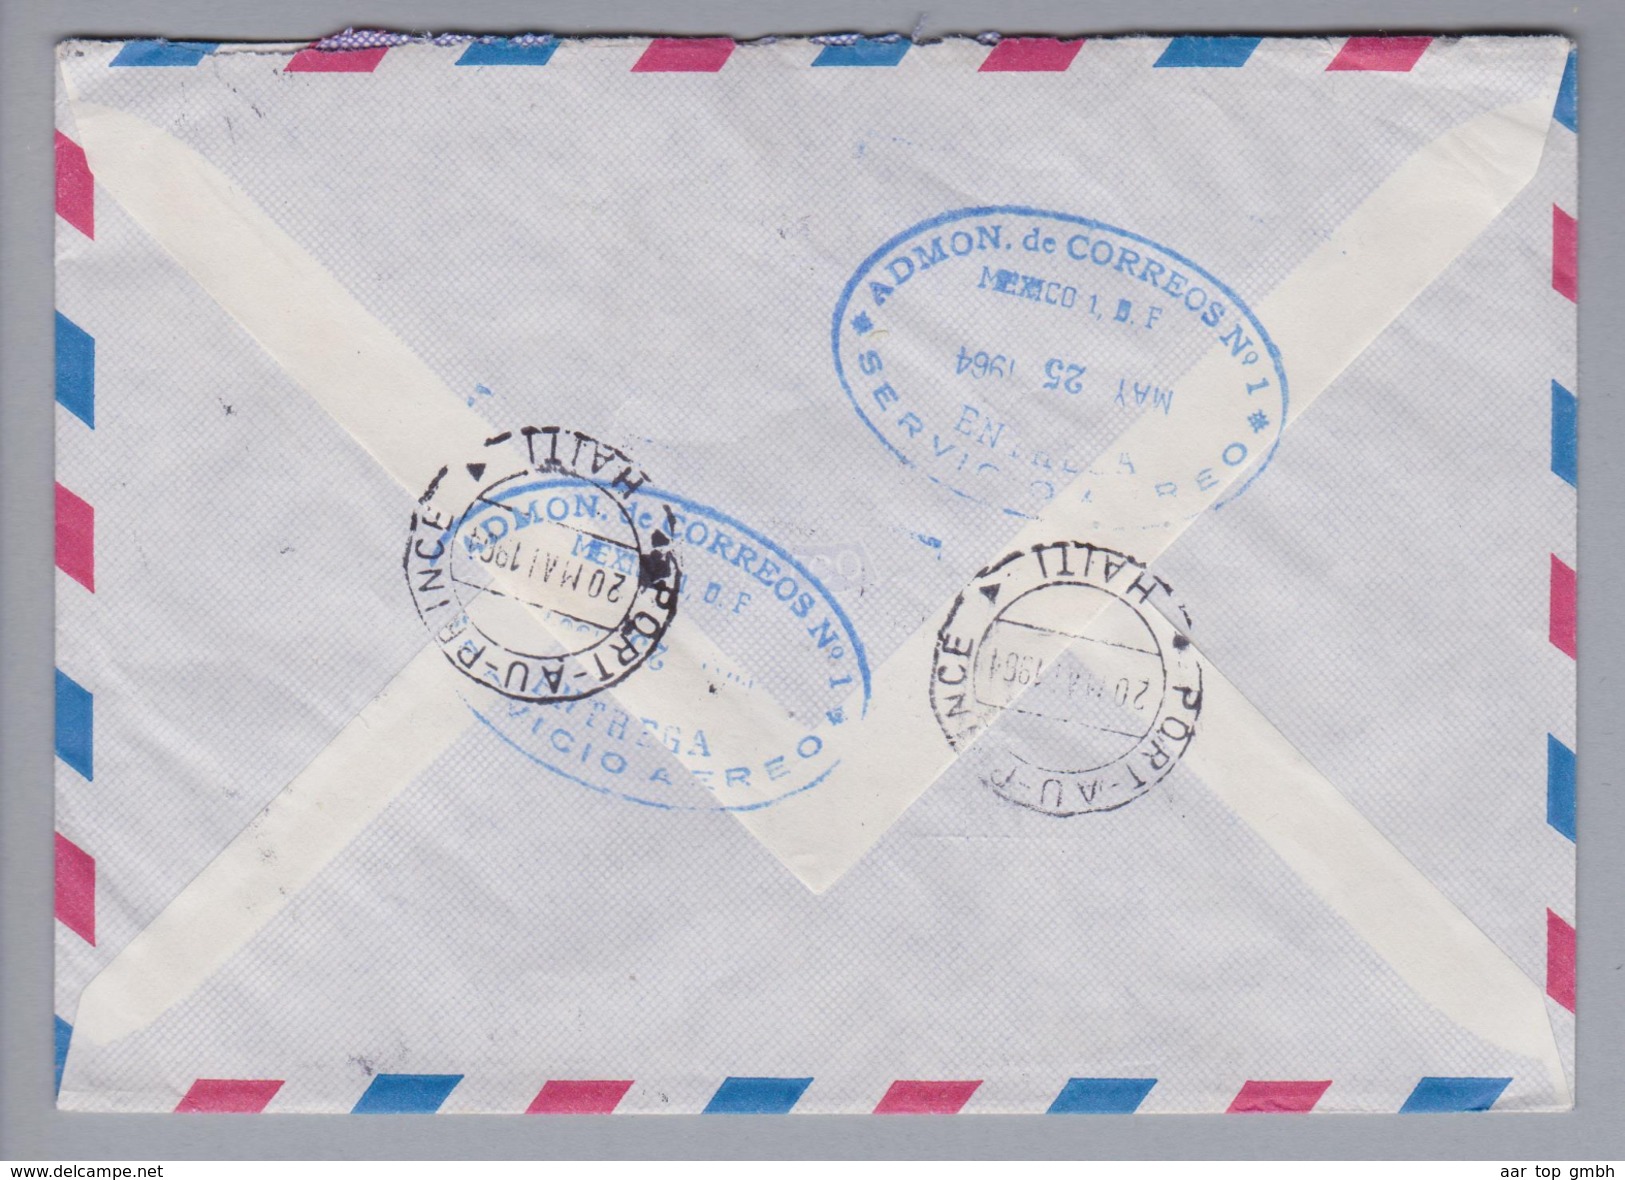 Motiv Botschaft/Konsulat Haiti 1964-05-20 Airmail Nach Mexico (Botschaft) - Haïti